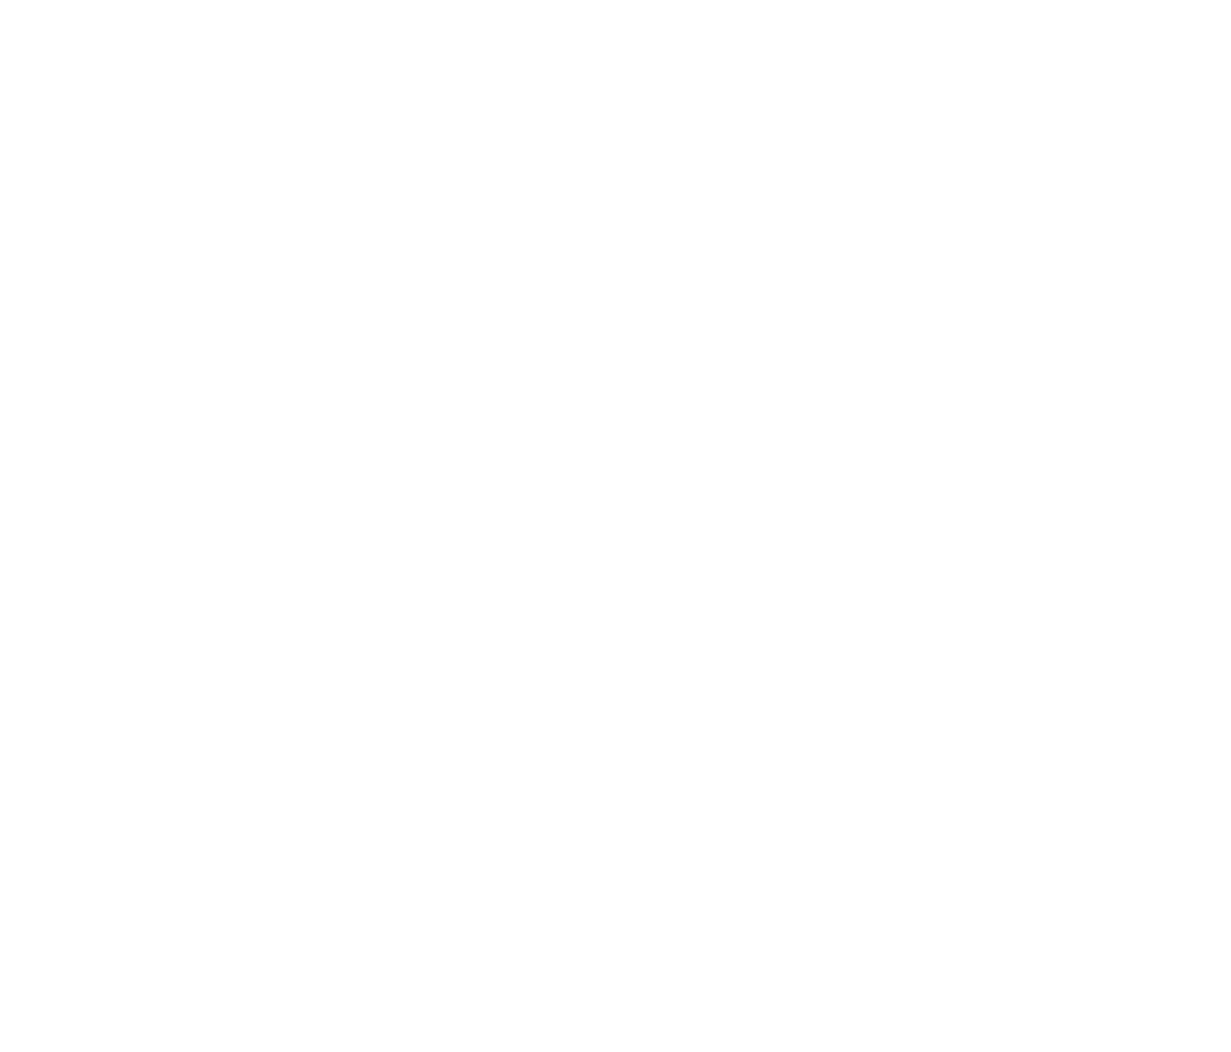 Ushuaia Photography